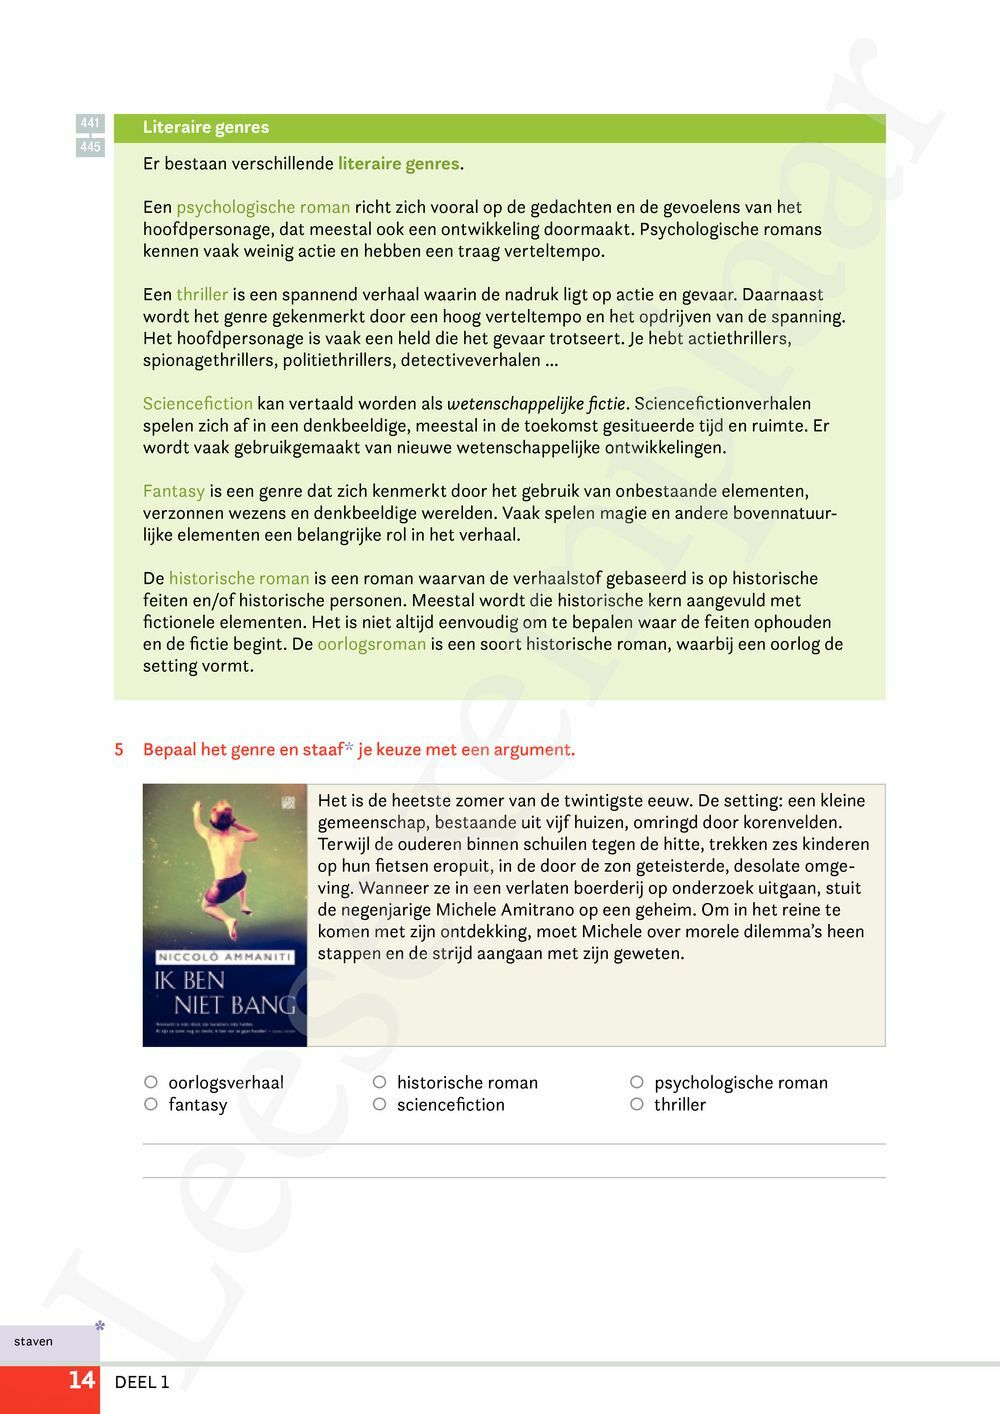 Preview: Campus Nederlands 4 Werkboek (incl. Pelckmans Portaal)